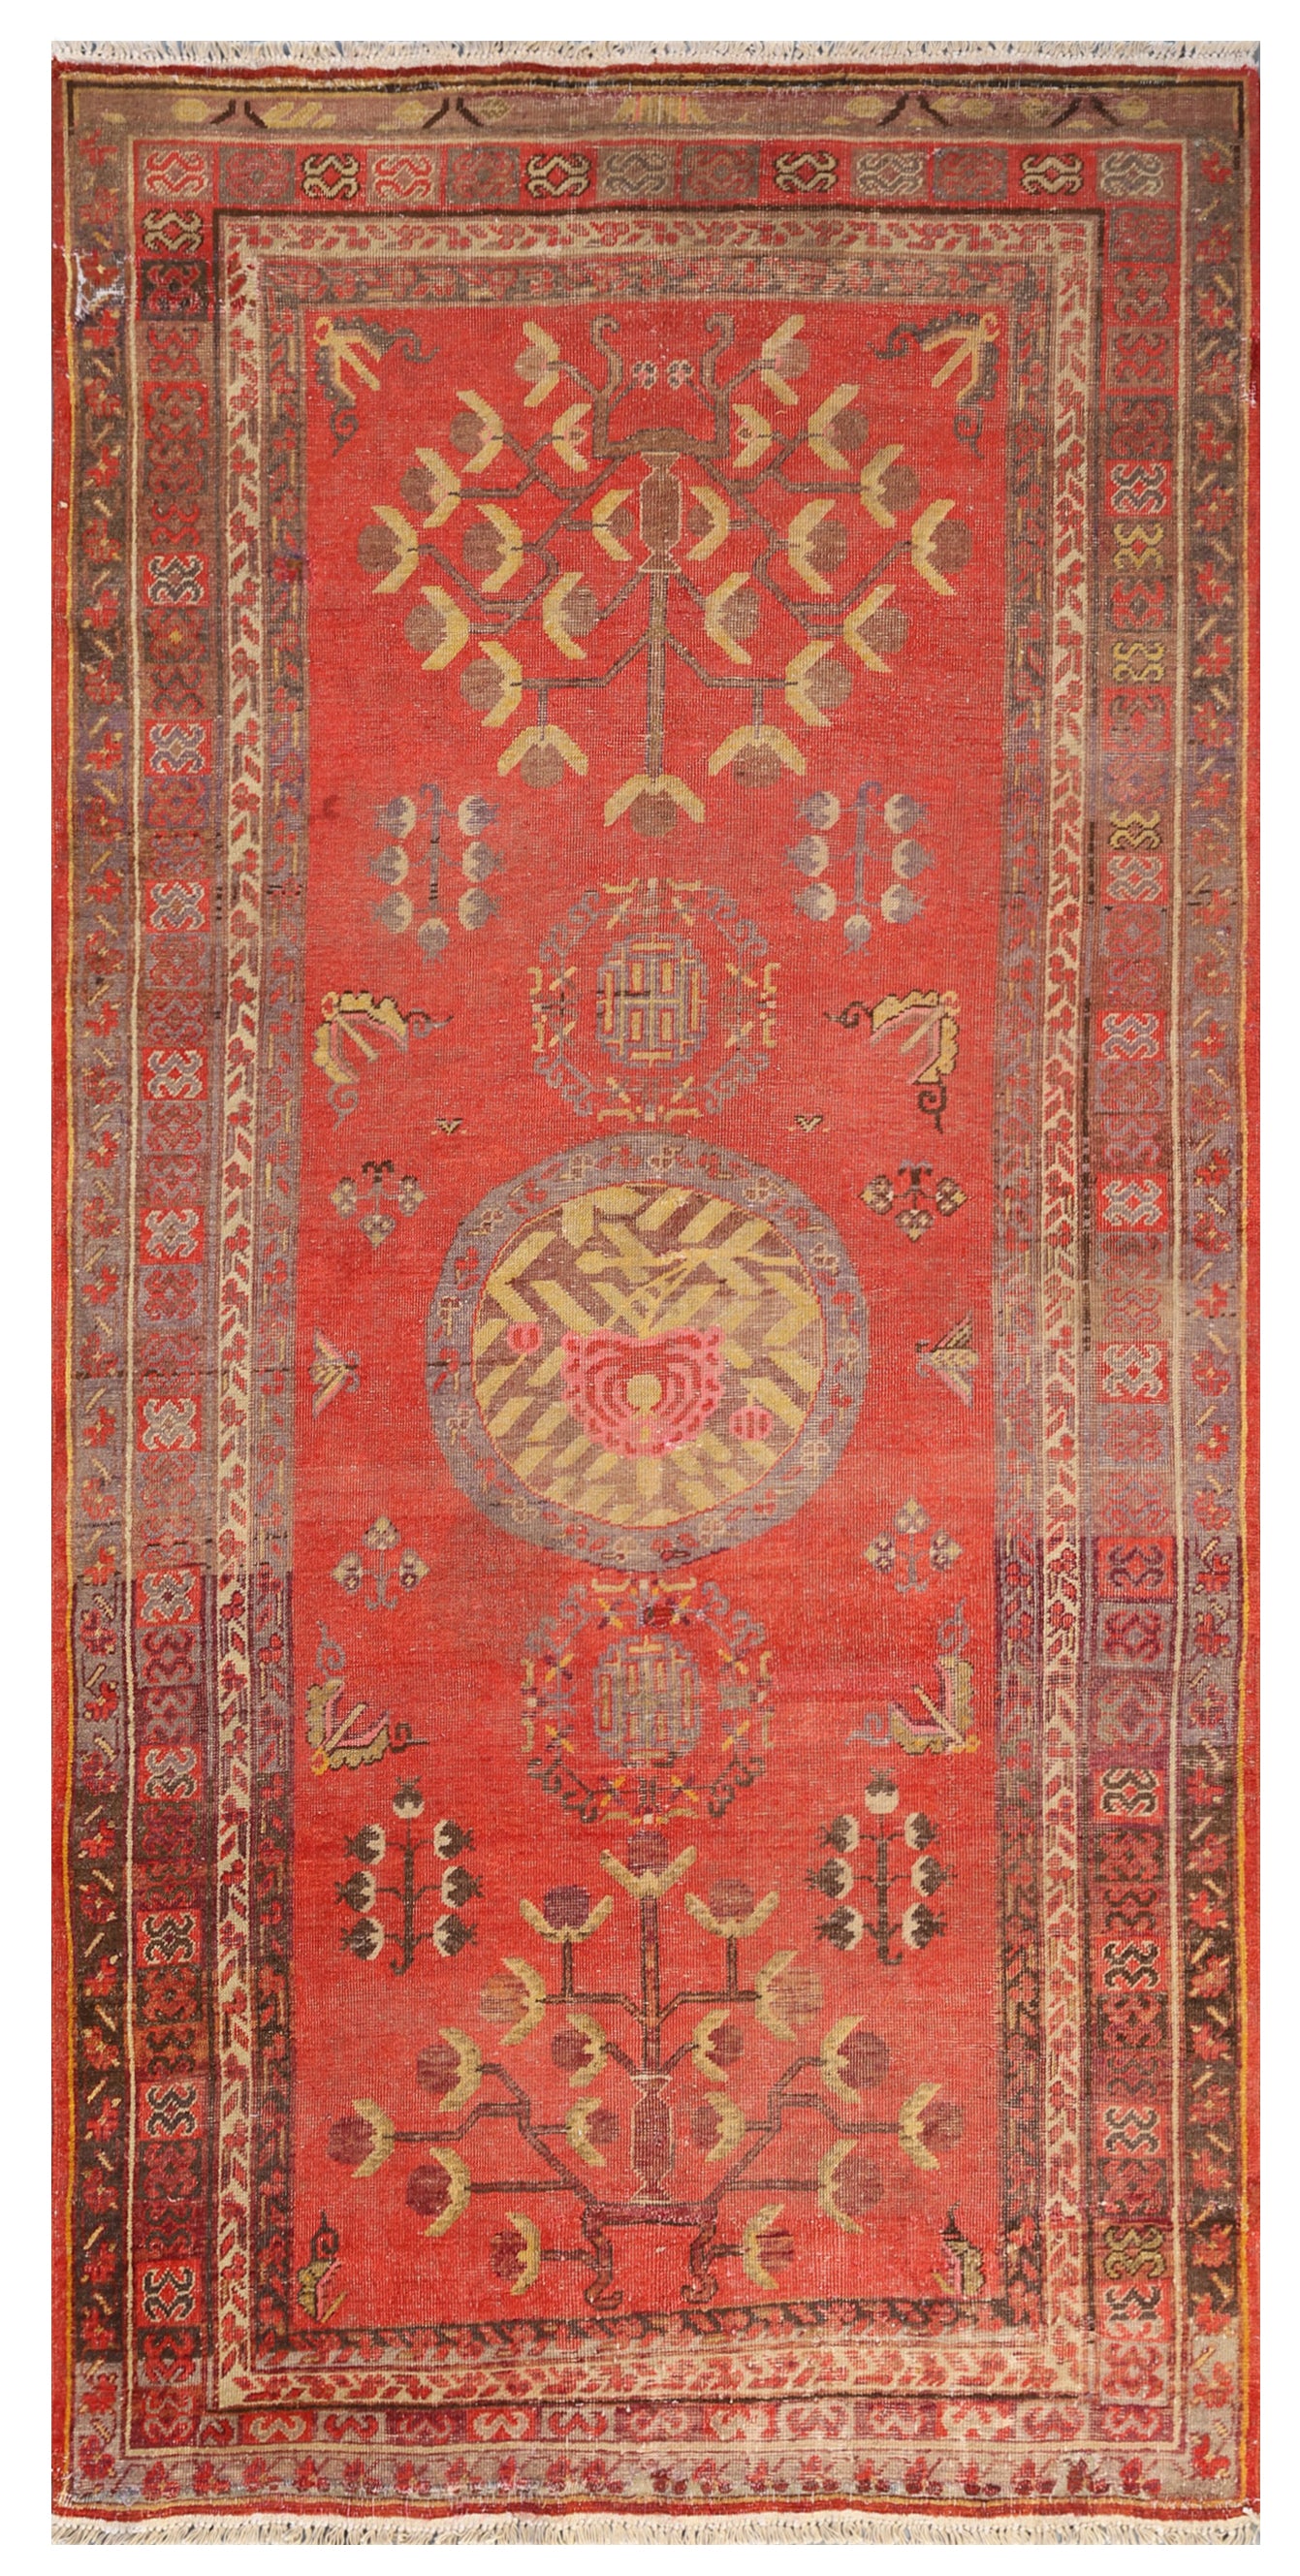 4'x8' Antique Khotan Rug